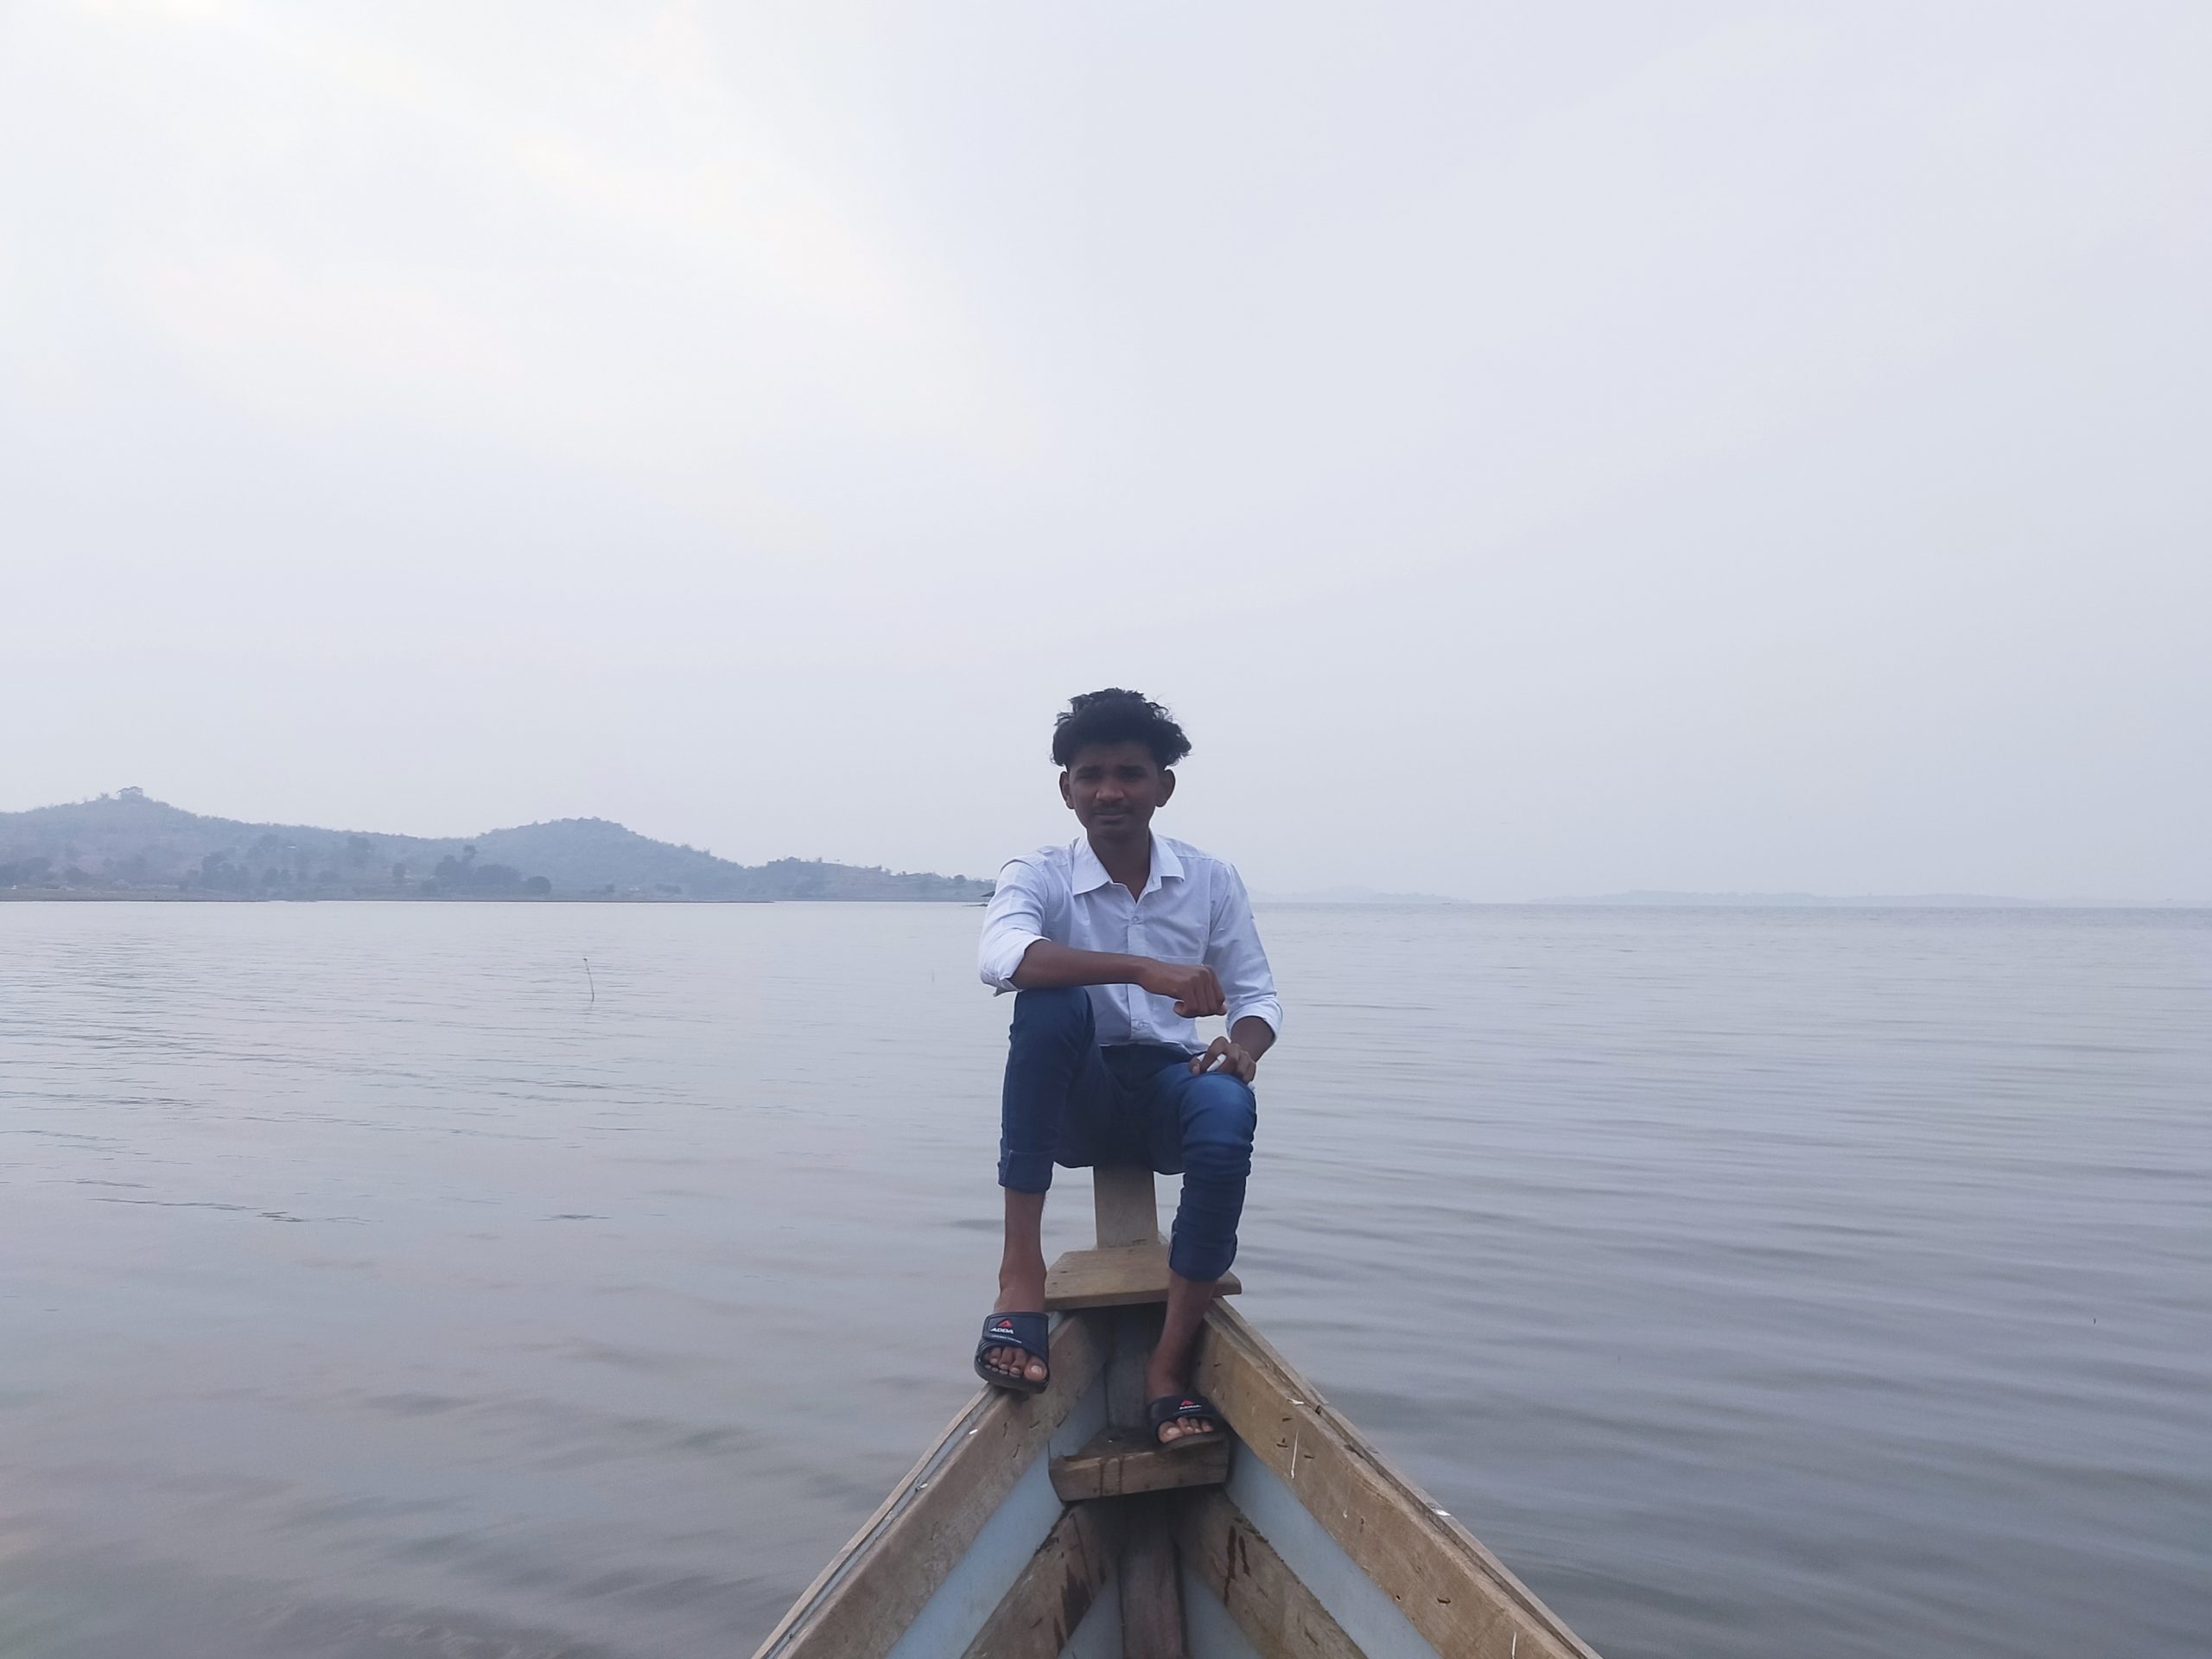 A boy on a boat